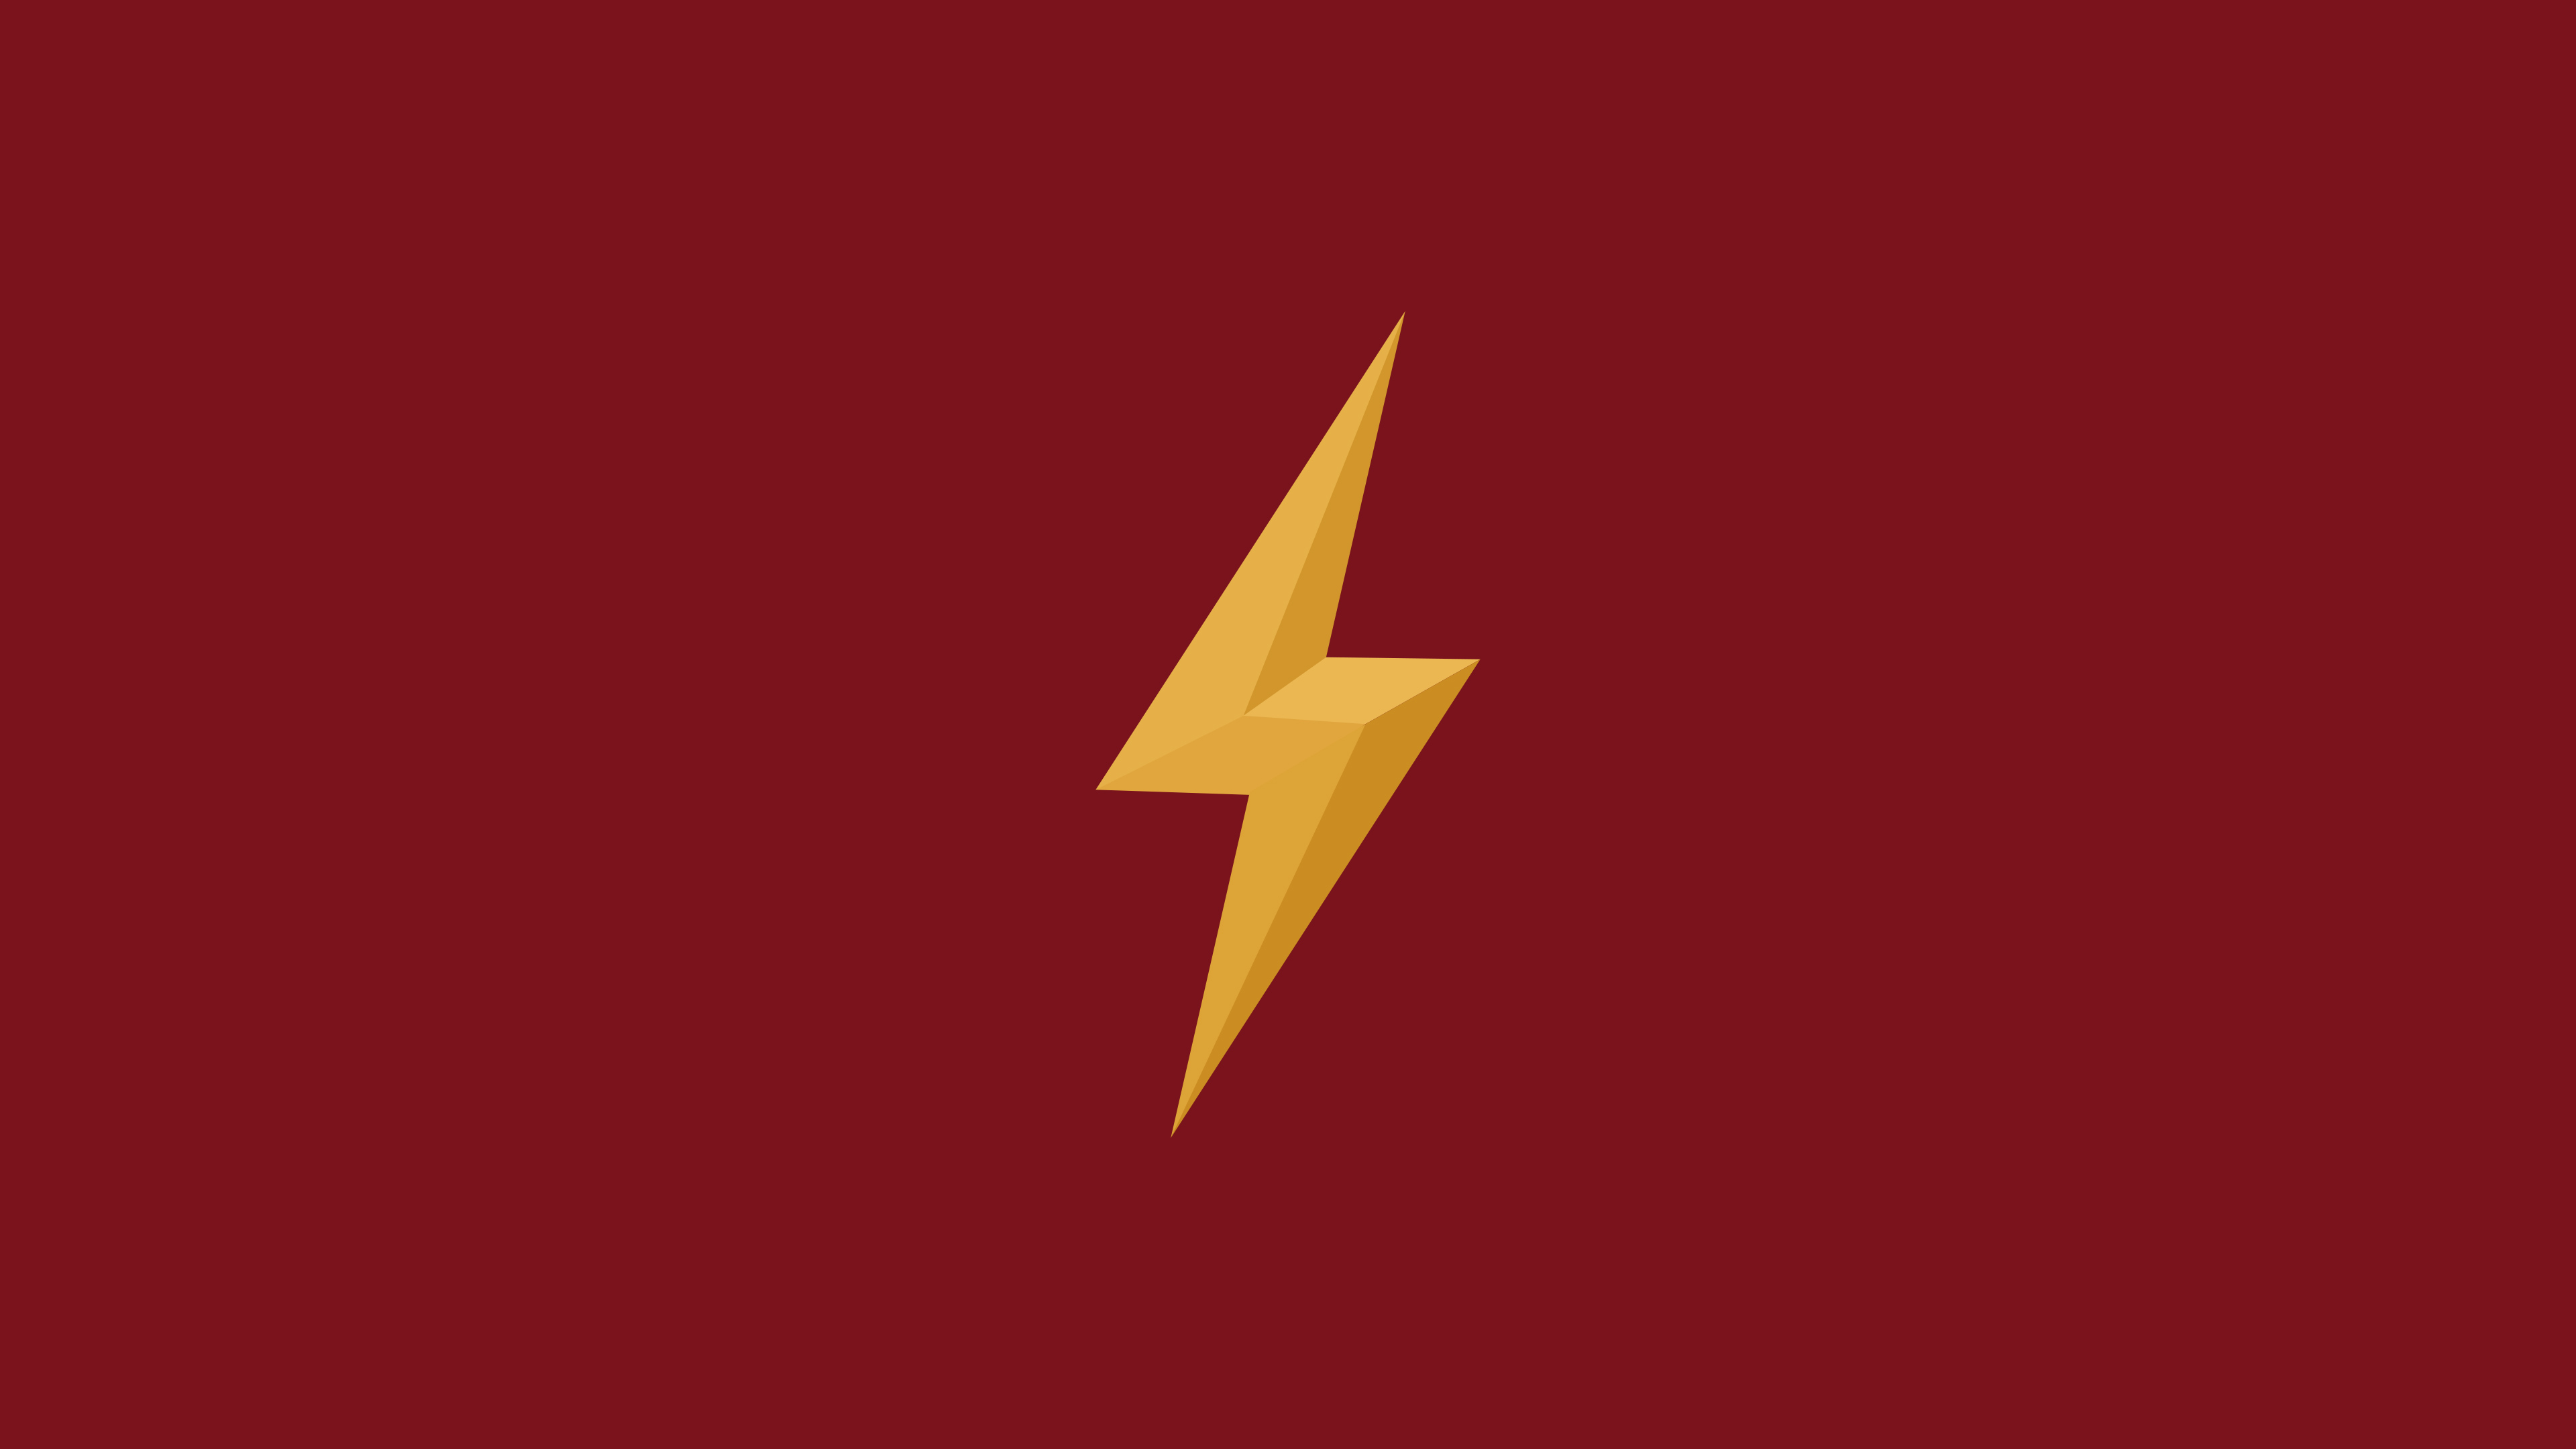 Descarga gratuita de fondo de pantalla para móvil de Minimalista, Historietas, Dc Comics, The Flash.